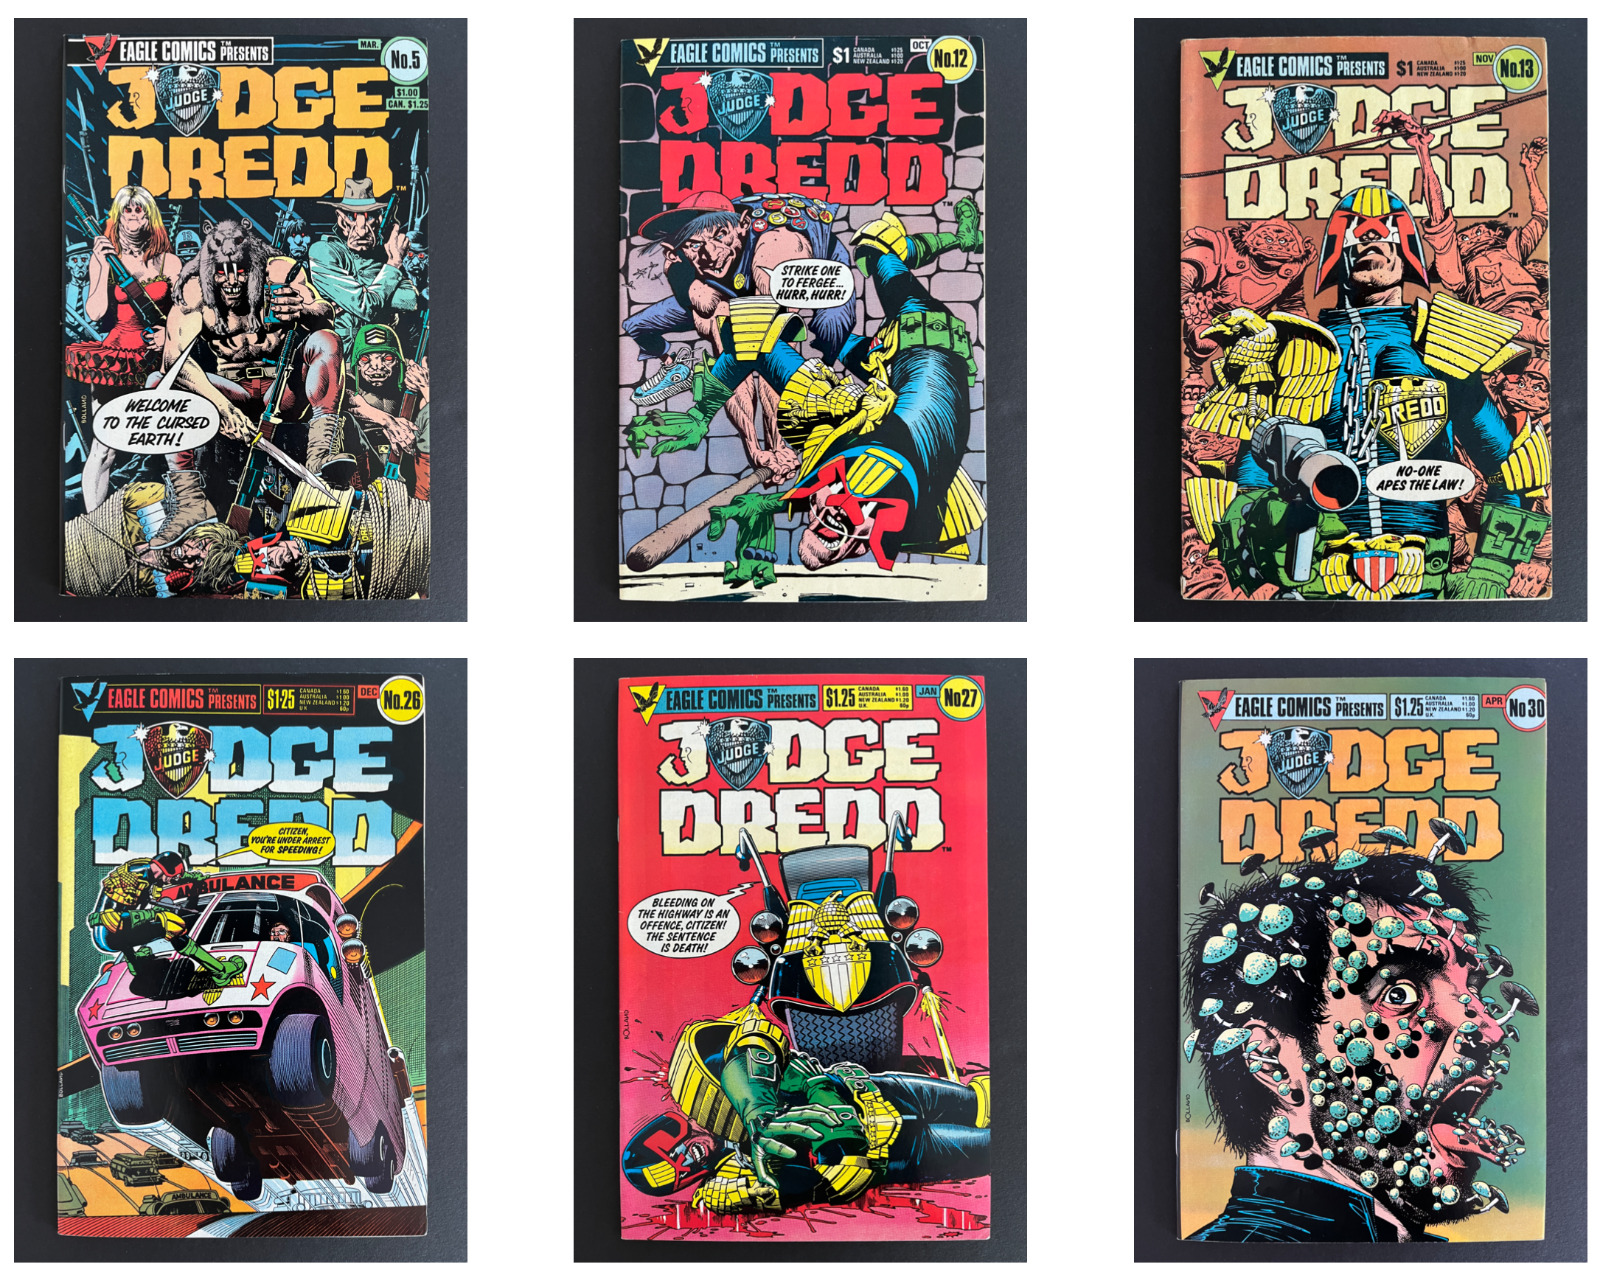 Judge Dredd #5 - #30 SINGLE ISSUES (Eagle Comics, 1984-1988) COMBINE SHIPPING